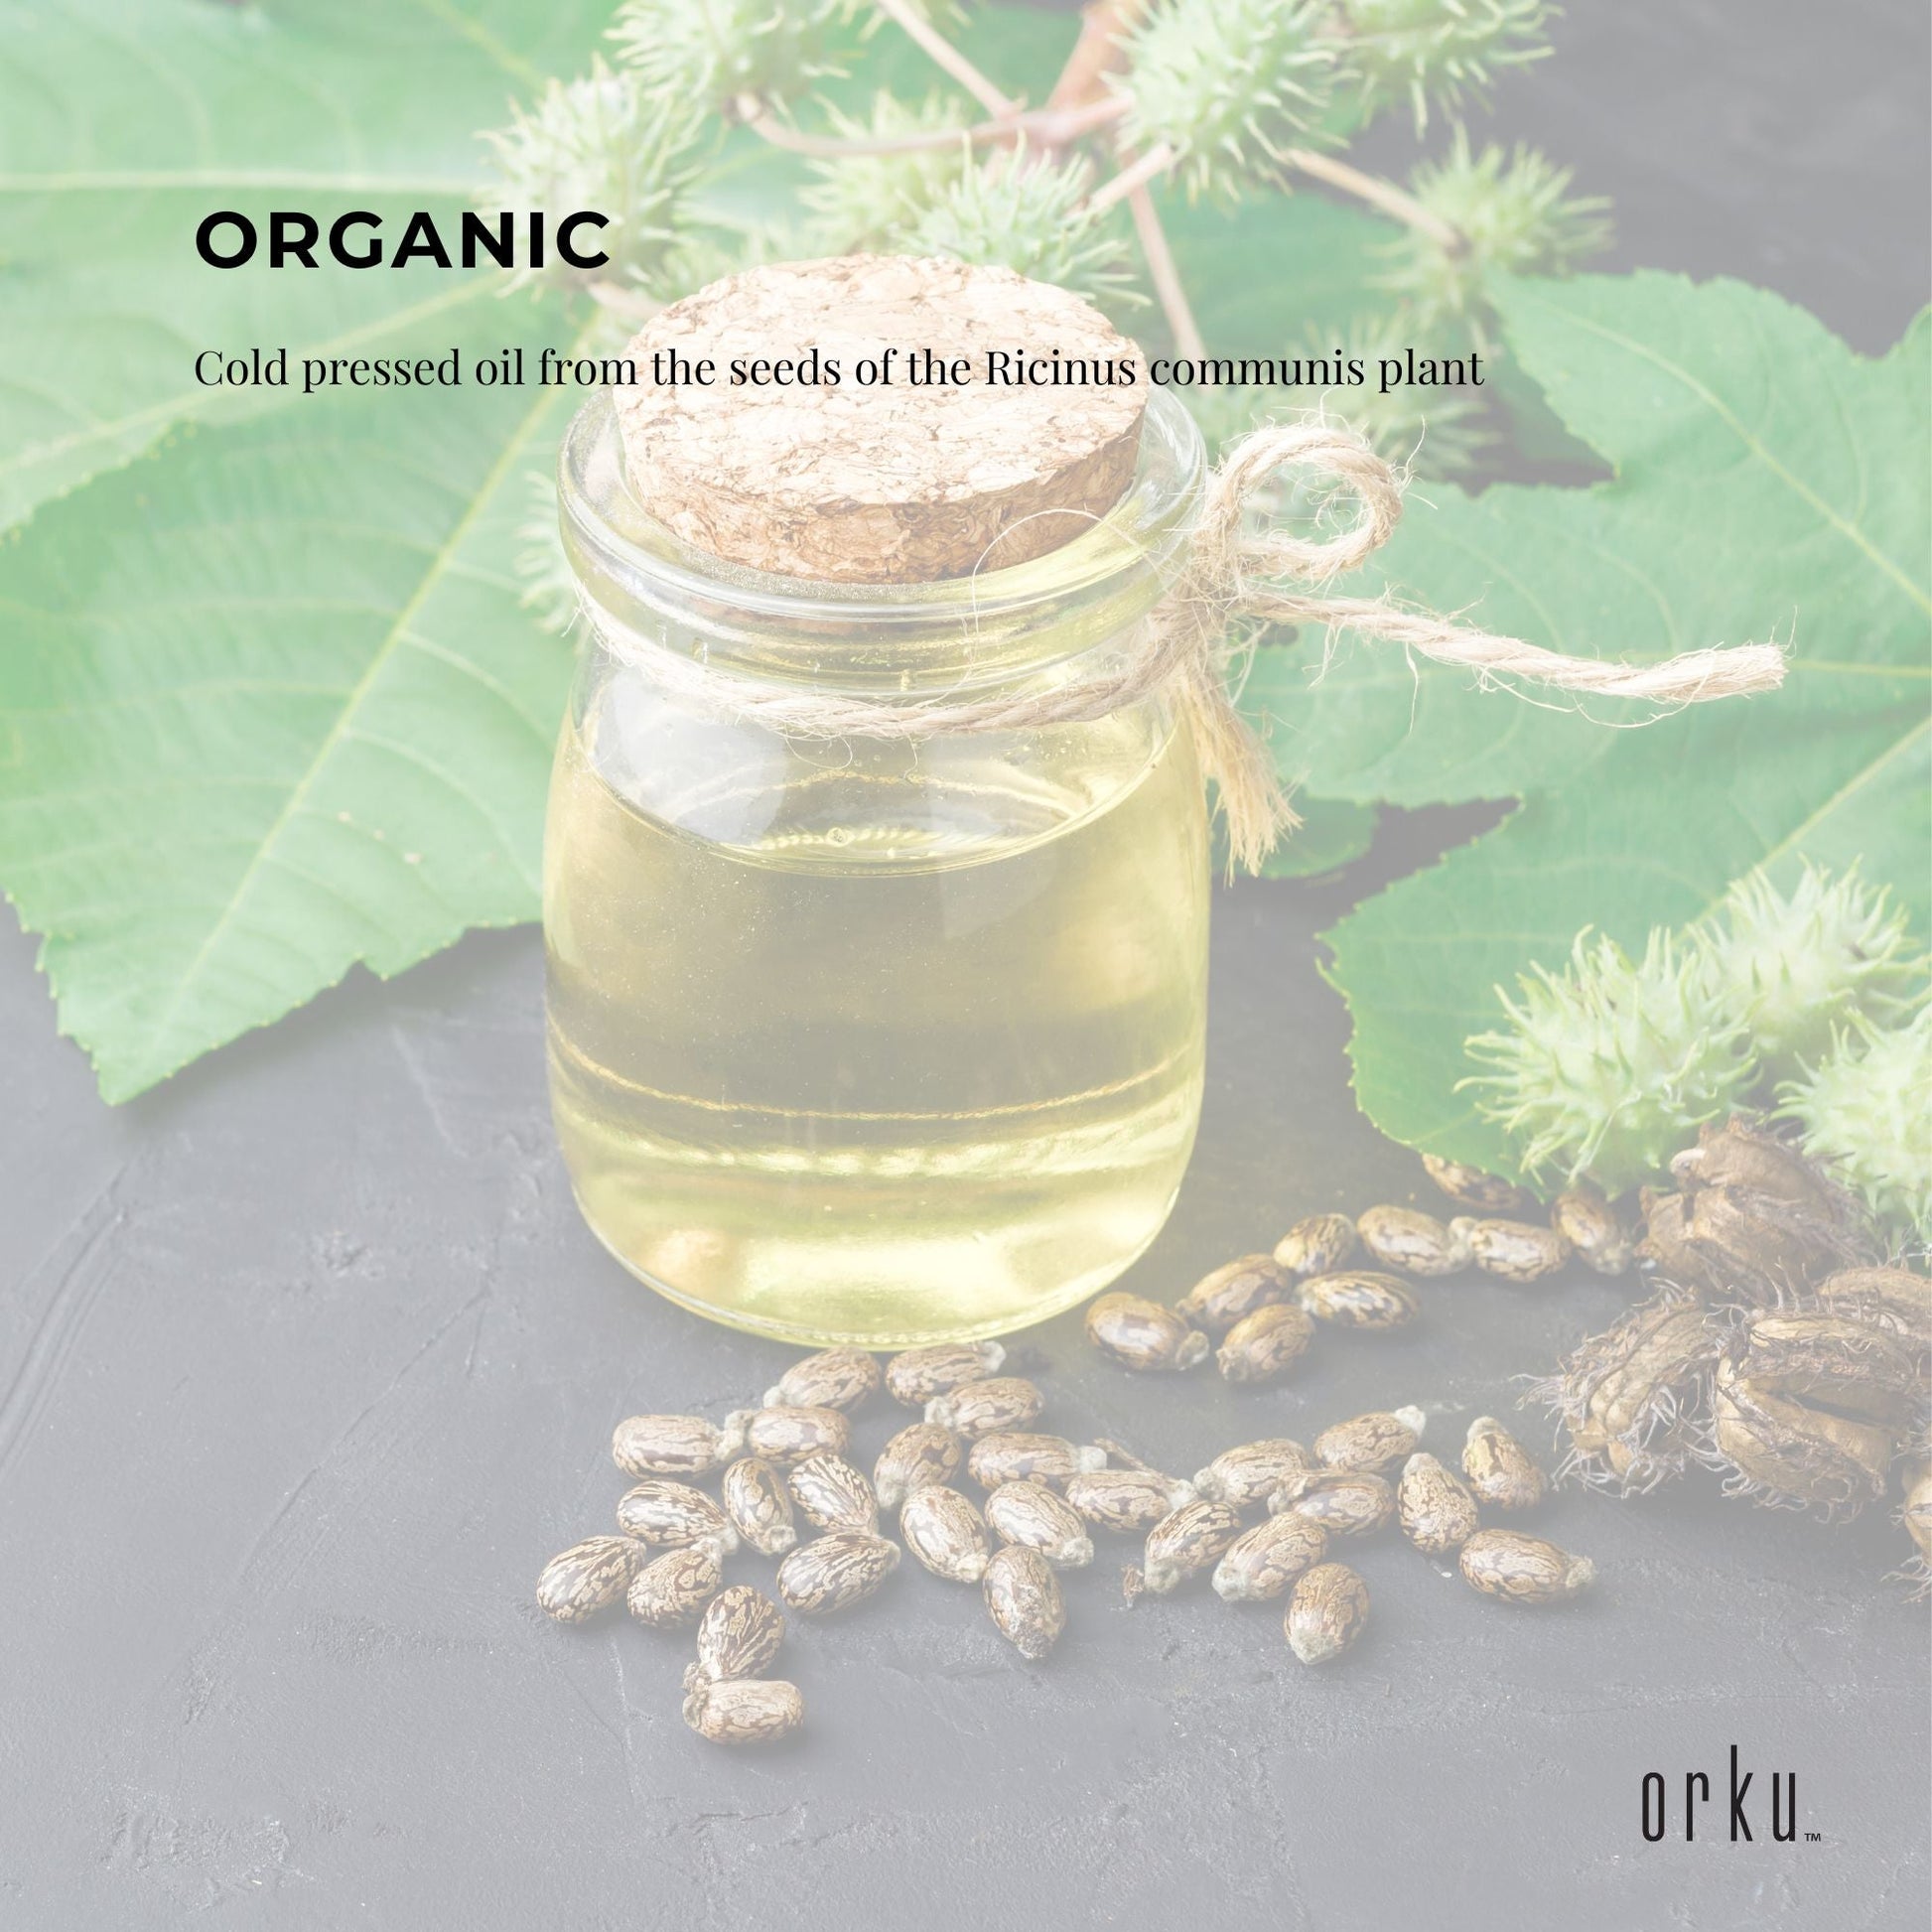 1L Organic Castor Oil - Hexane Free Cold Pressed Anti Oxidant Skin Hair Care